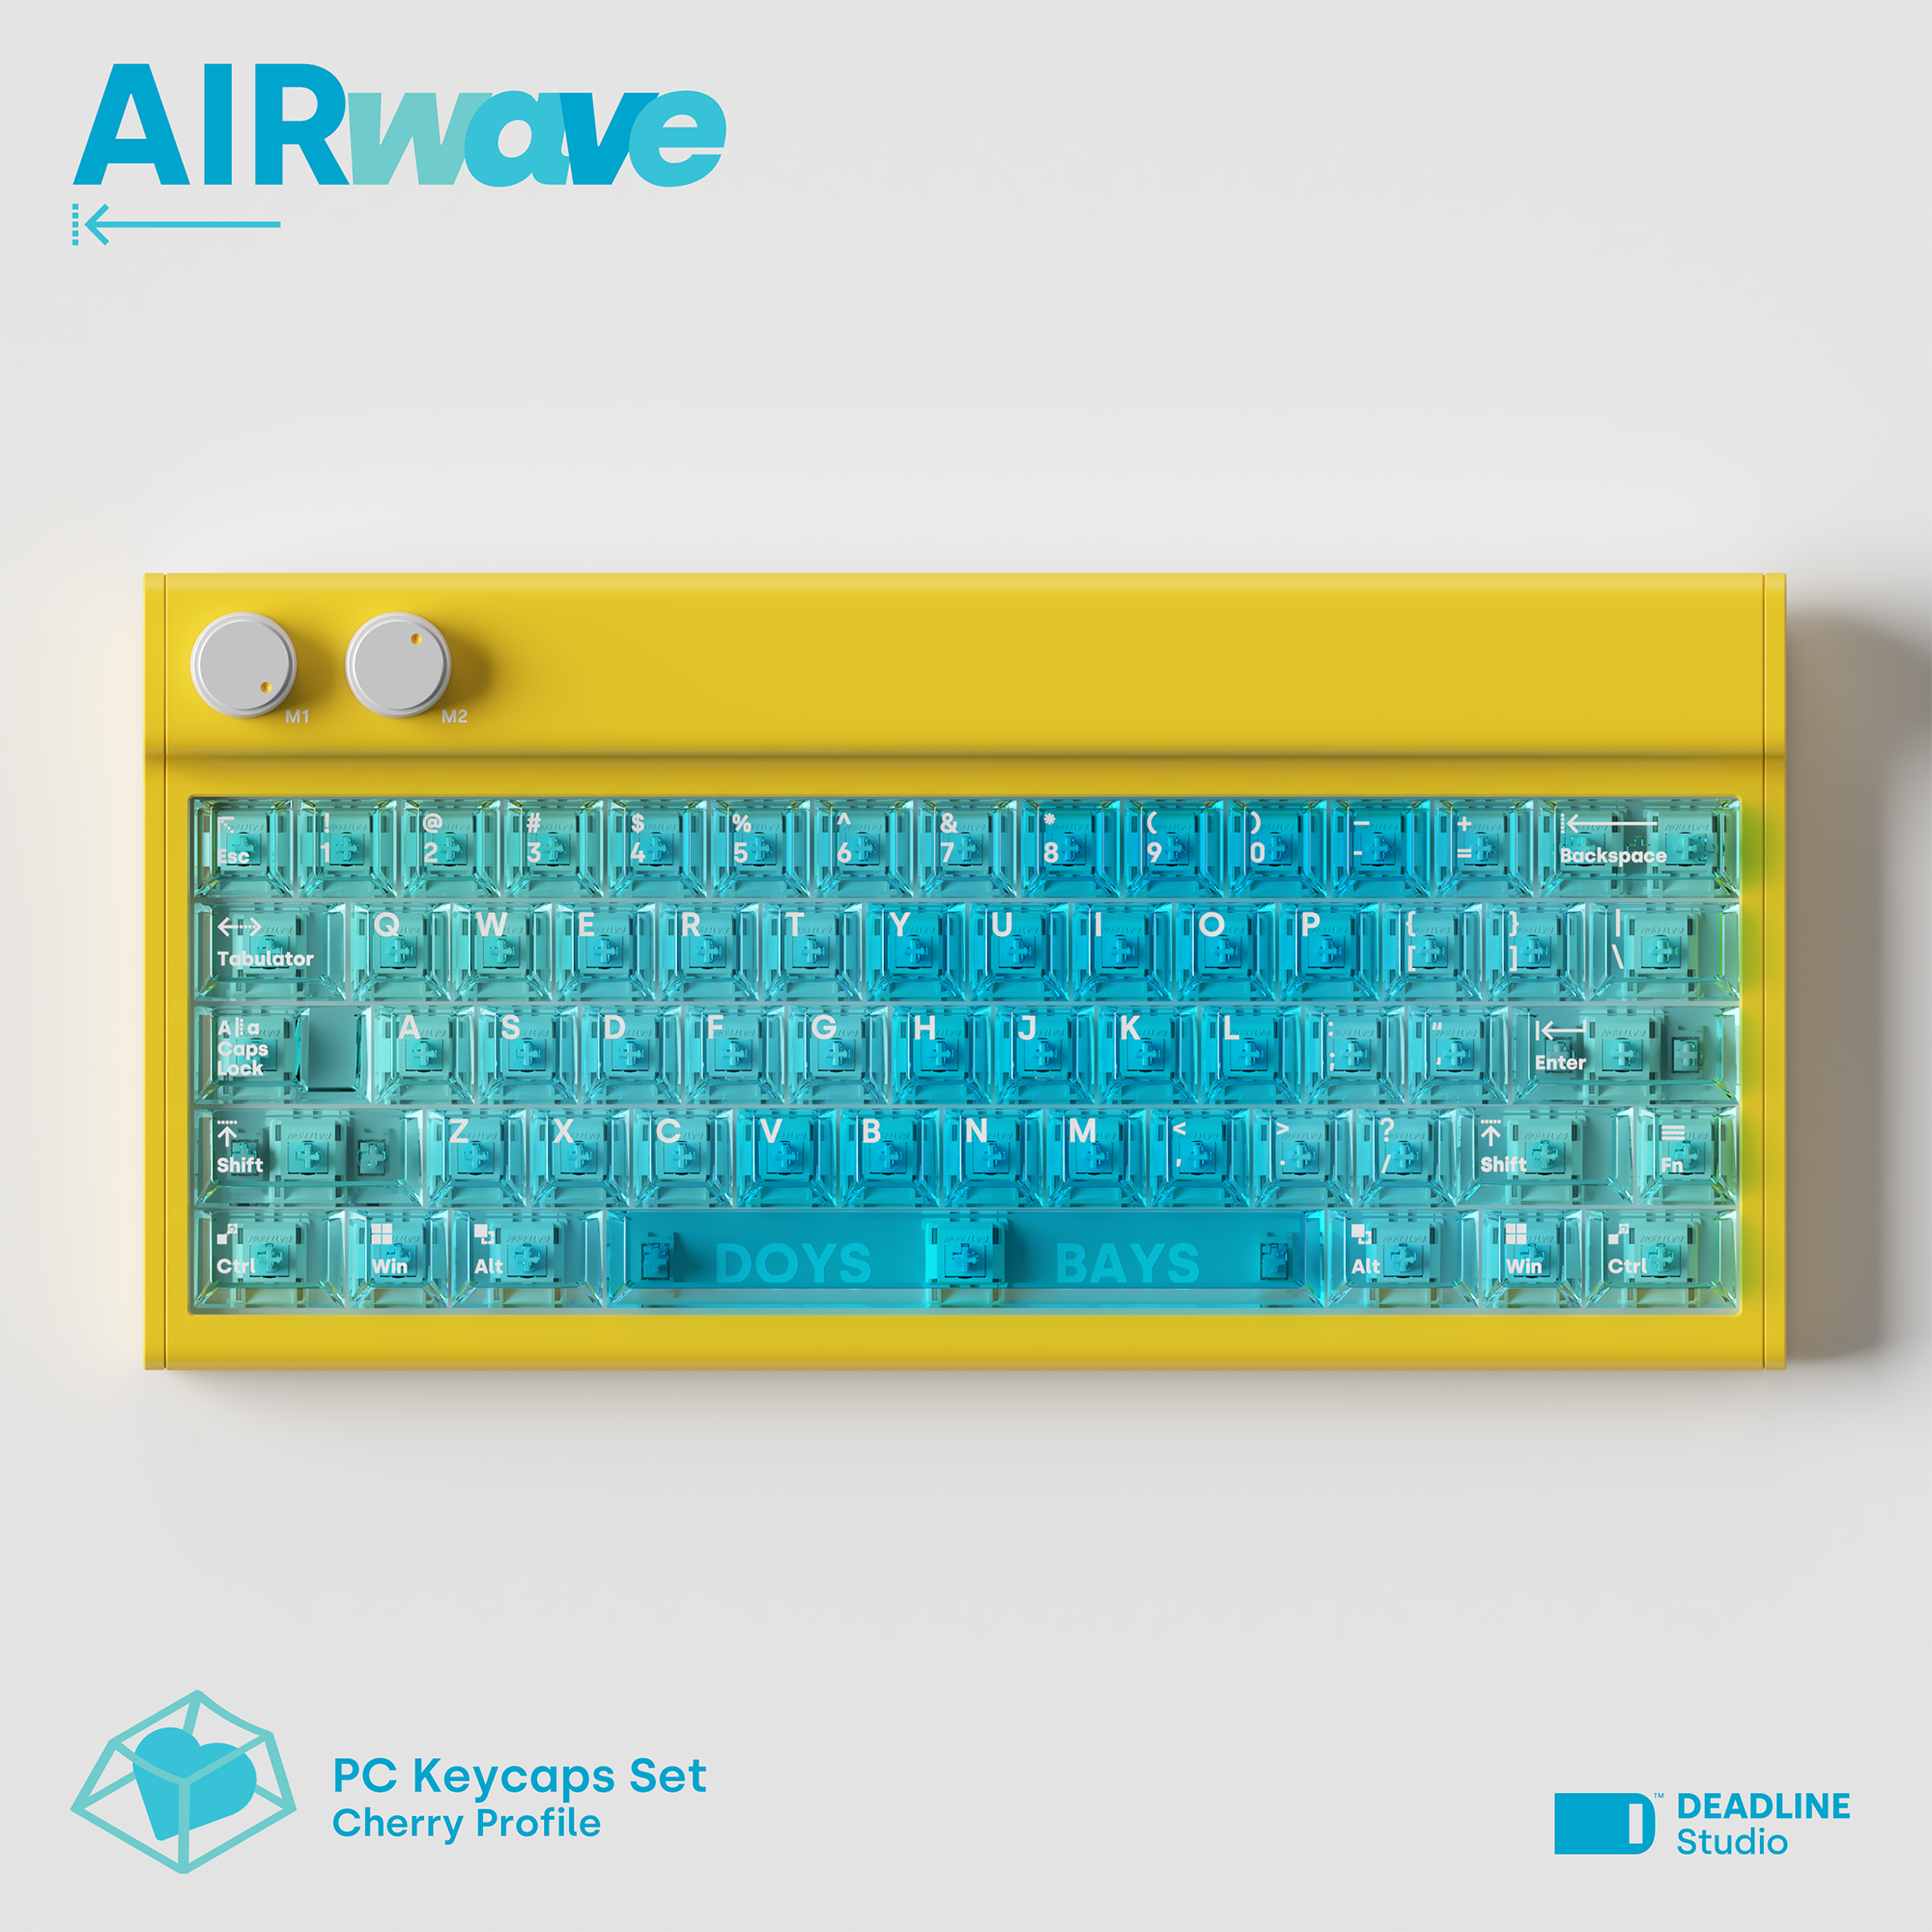 Deadline Air-wave PC Keycaps